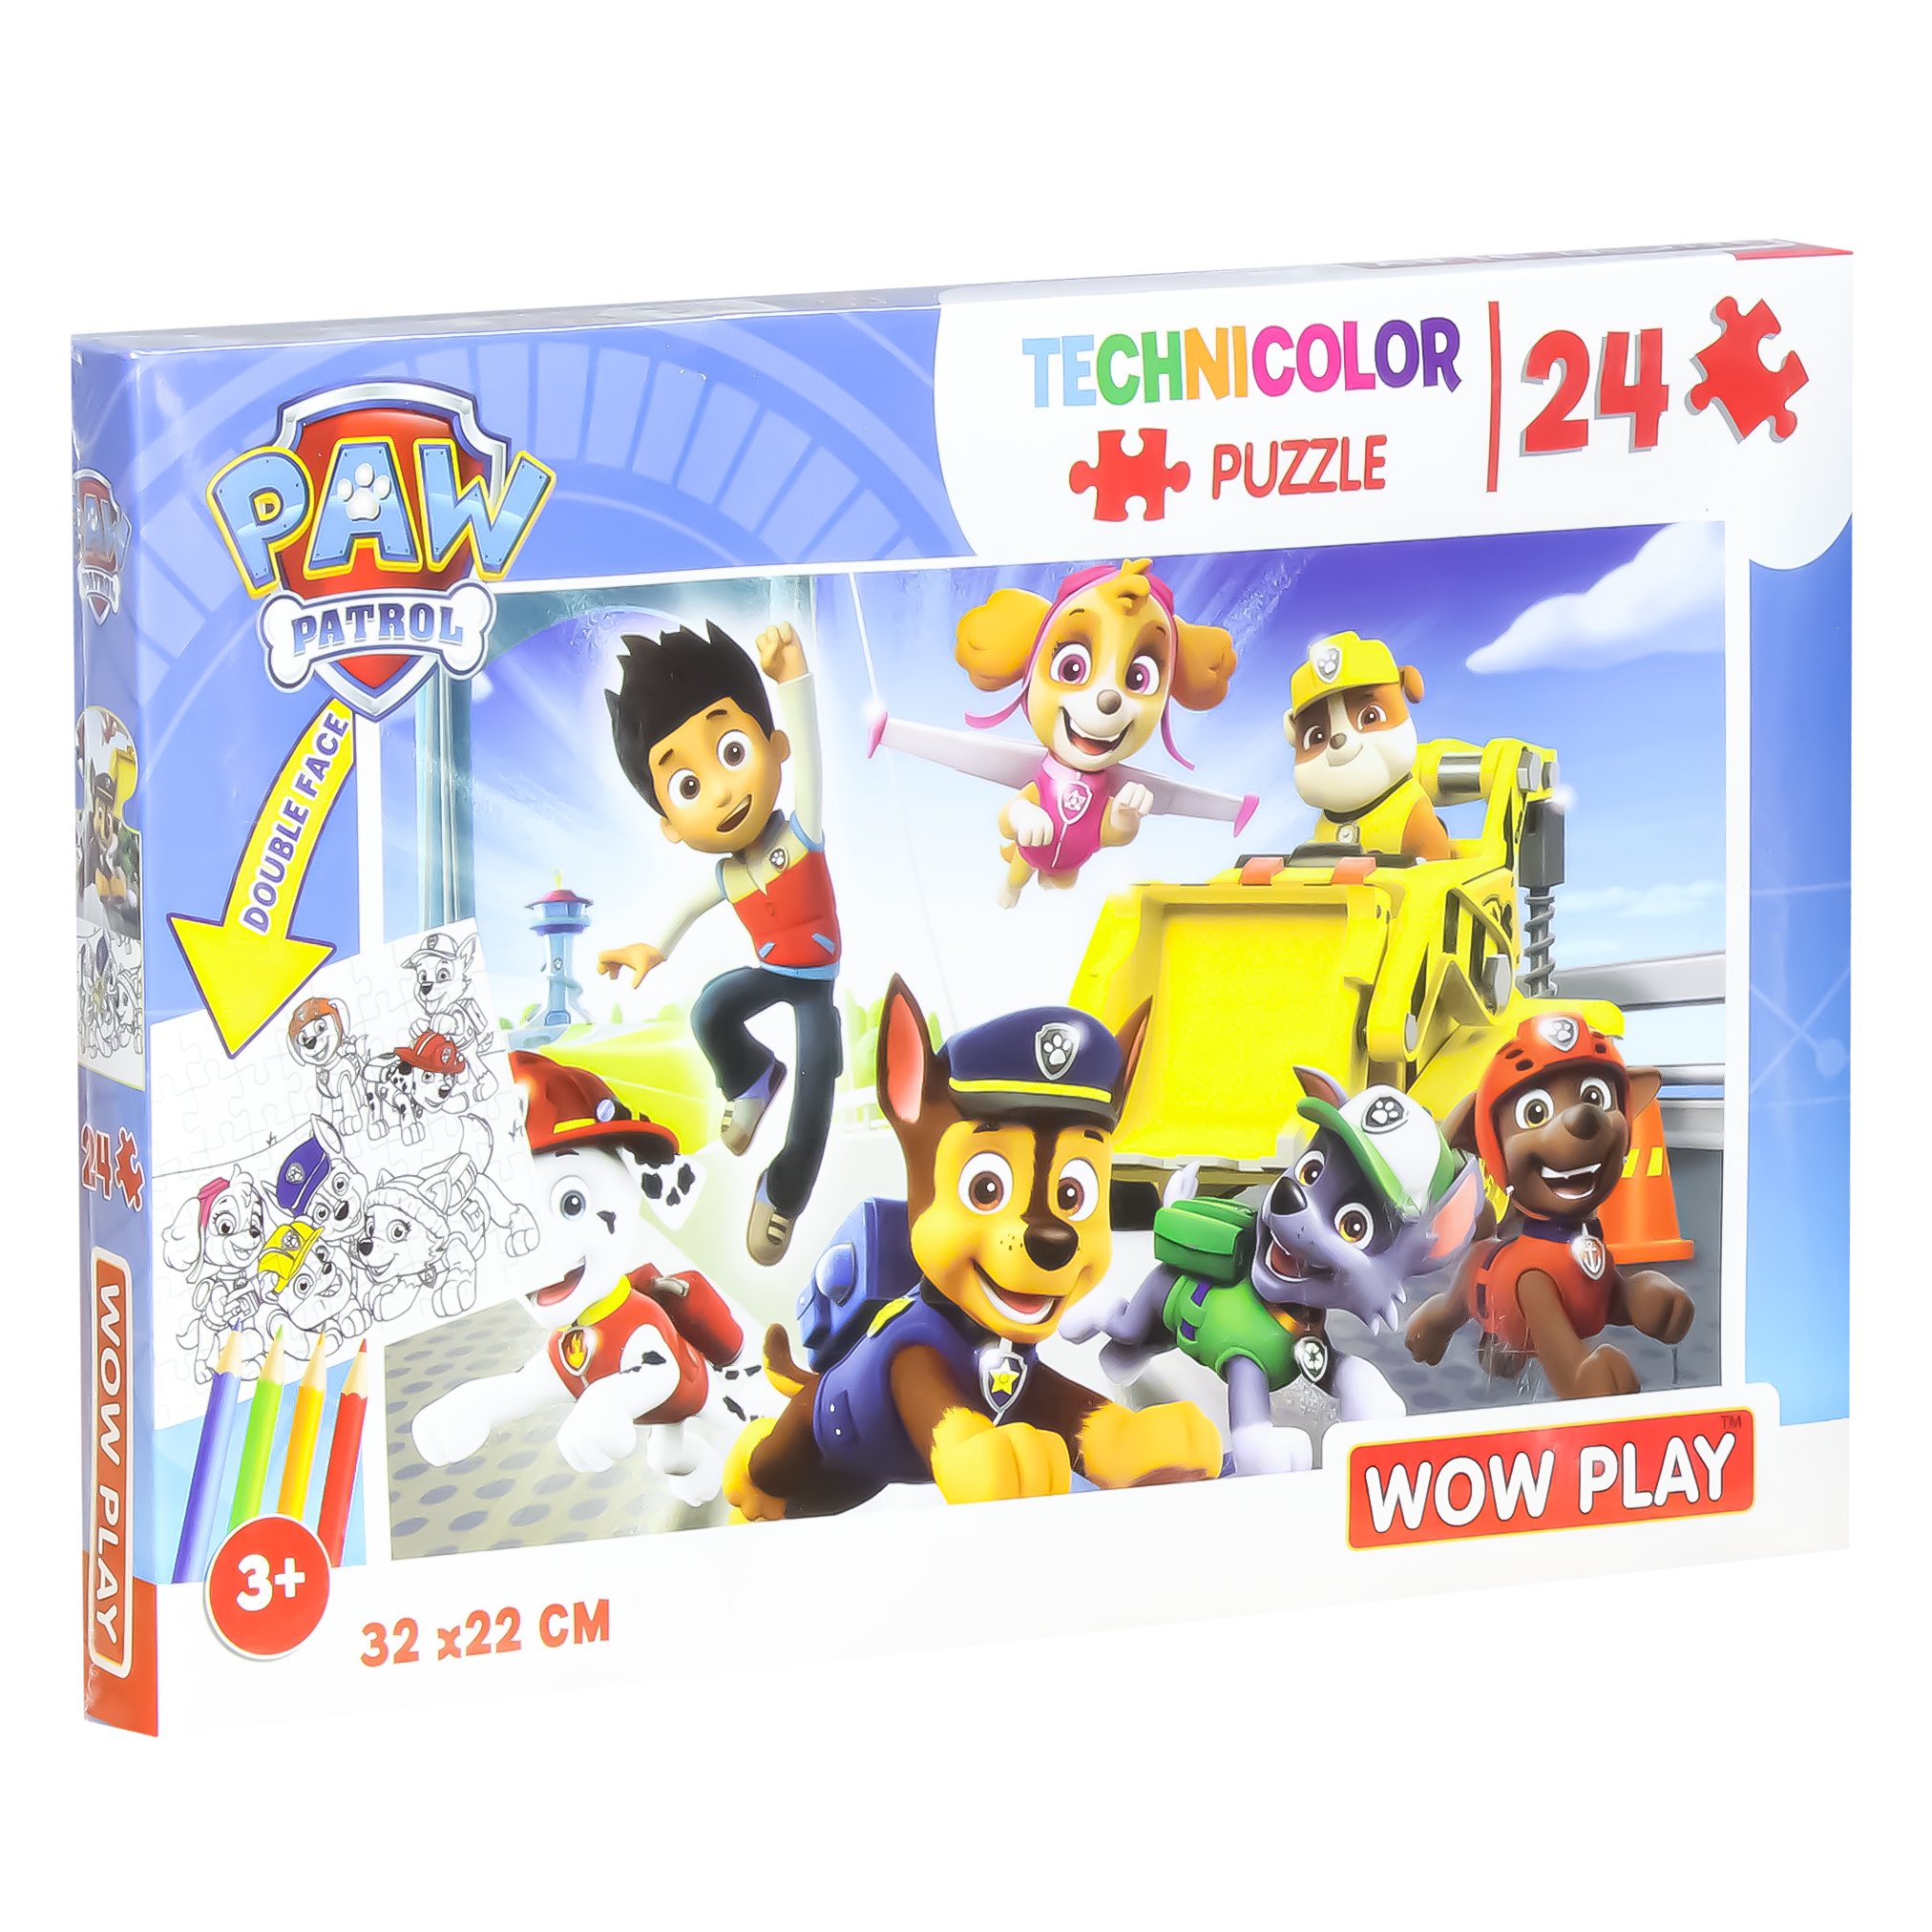 Wow Play Technicolour Puzzle 24 pieces 